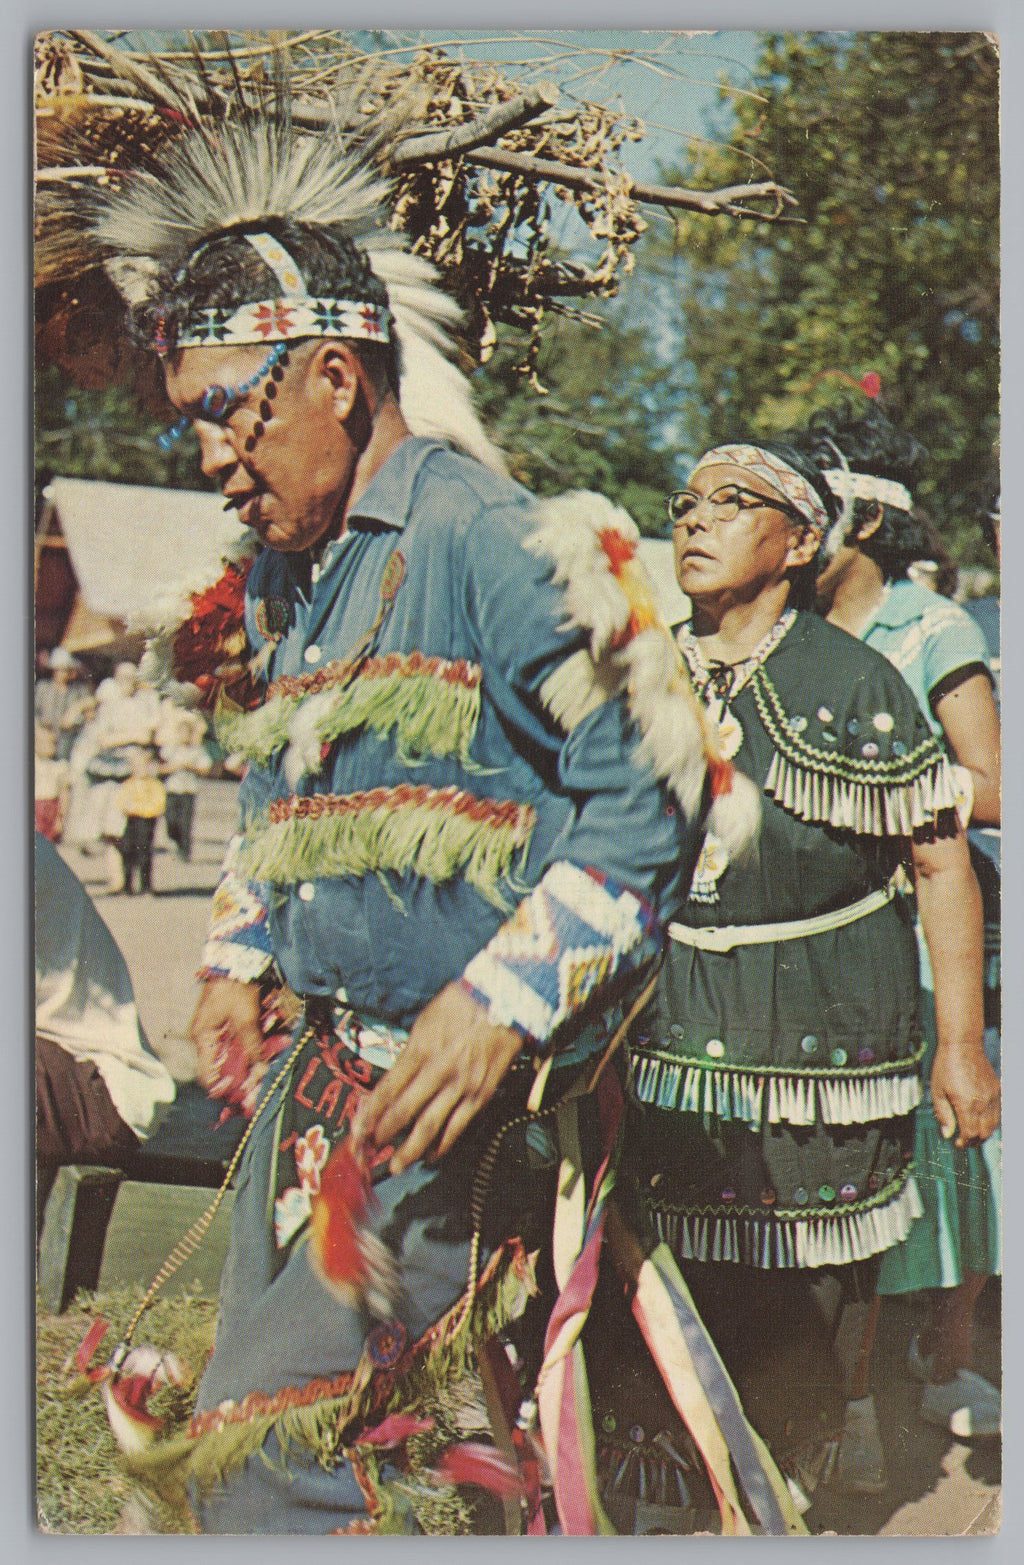 Millie Lacks Indian Trading Post And Museum, Onamia, Minnesota, VTG PC